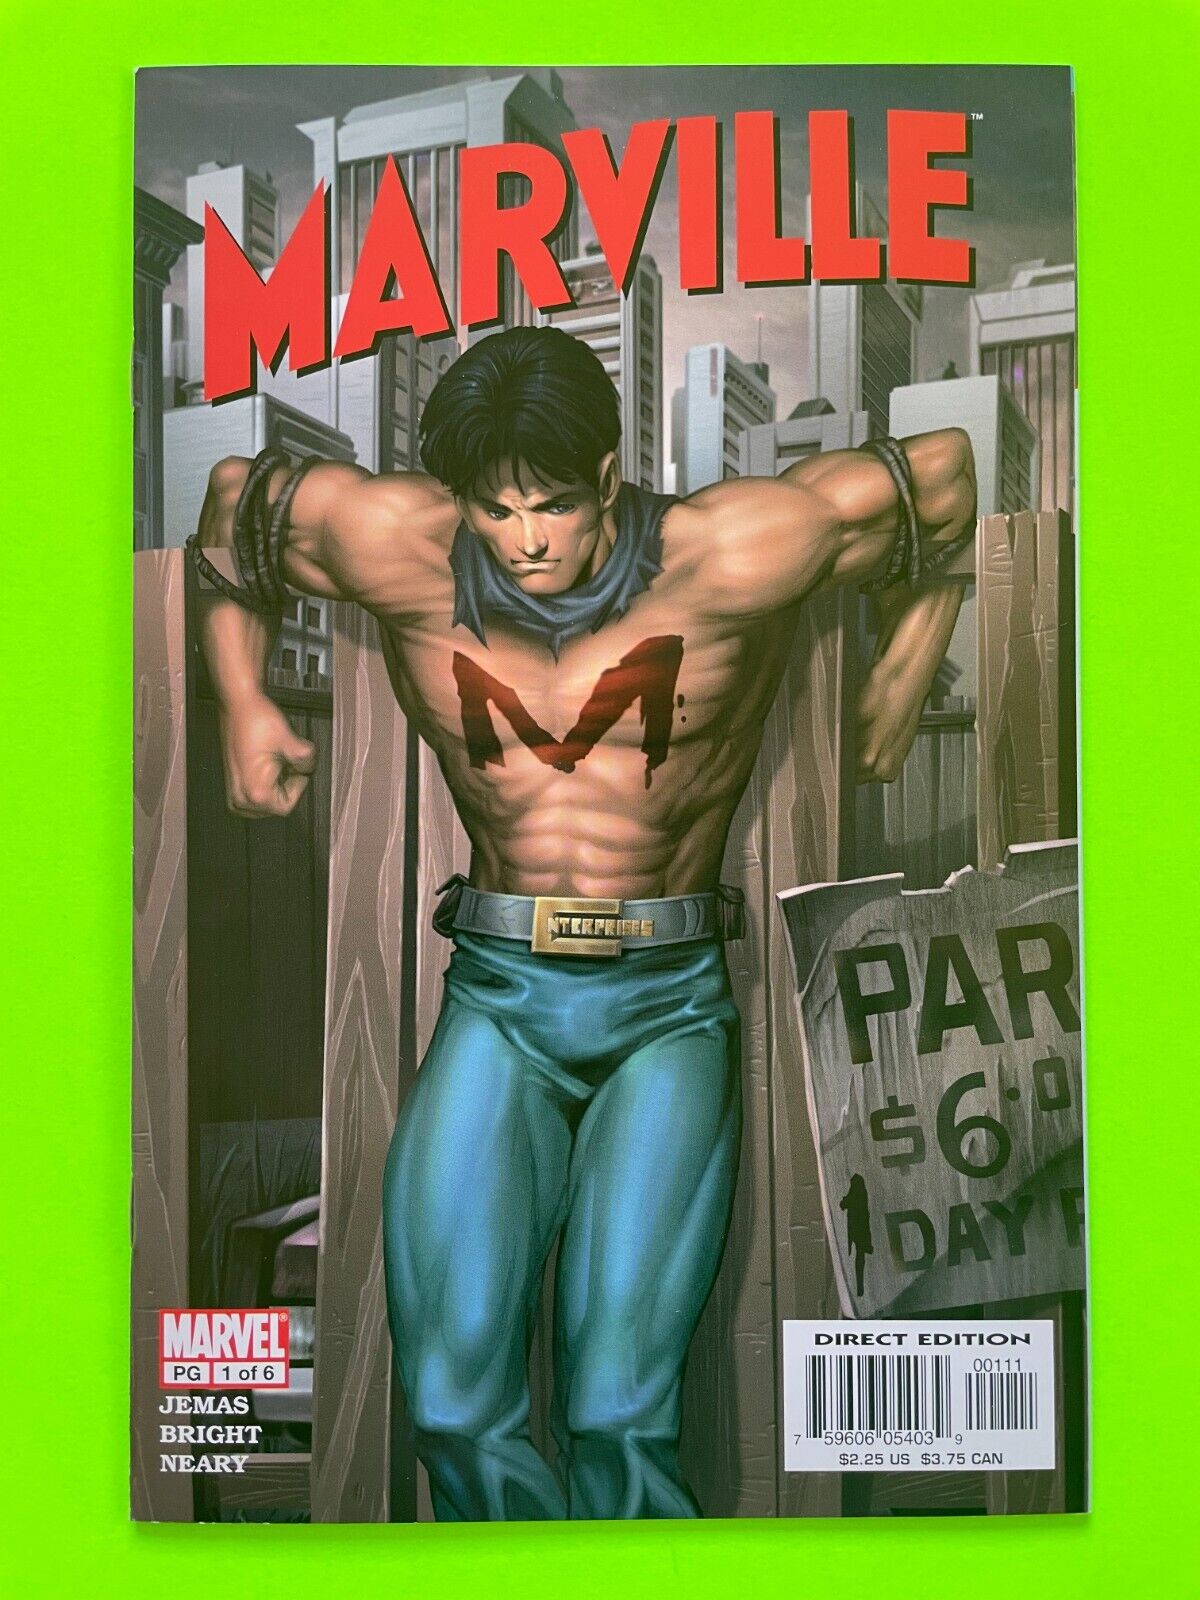 Marville #1 (Marvel, 2002) NM Bill Jemas pranks the DC Universe